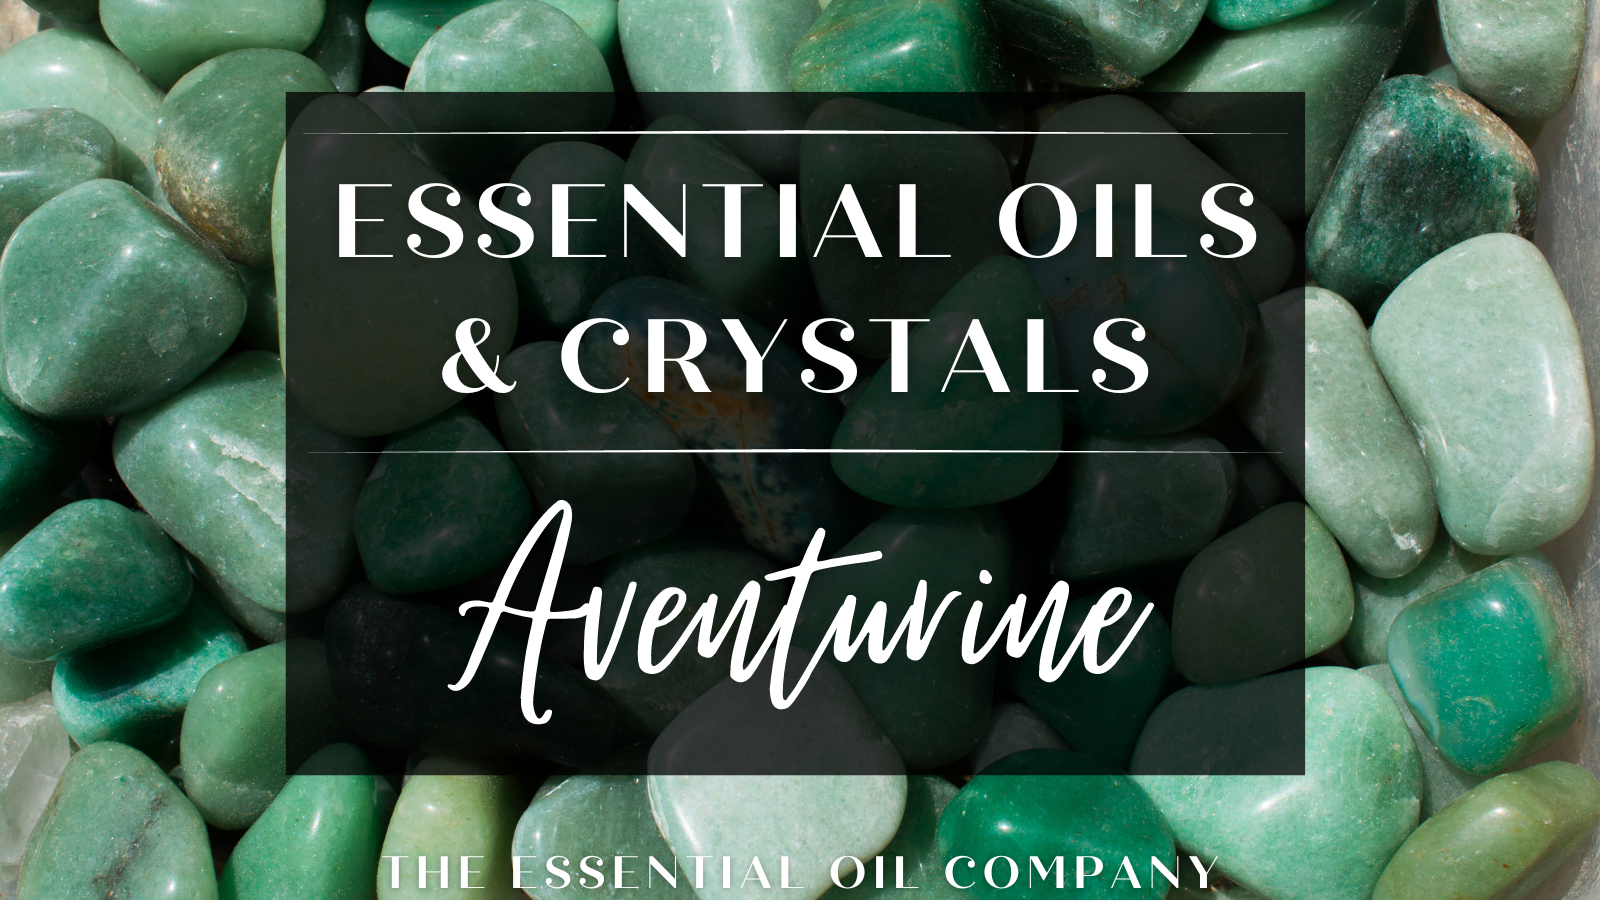 Essential Oils & Crystals: Aventurine